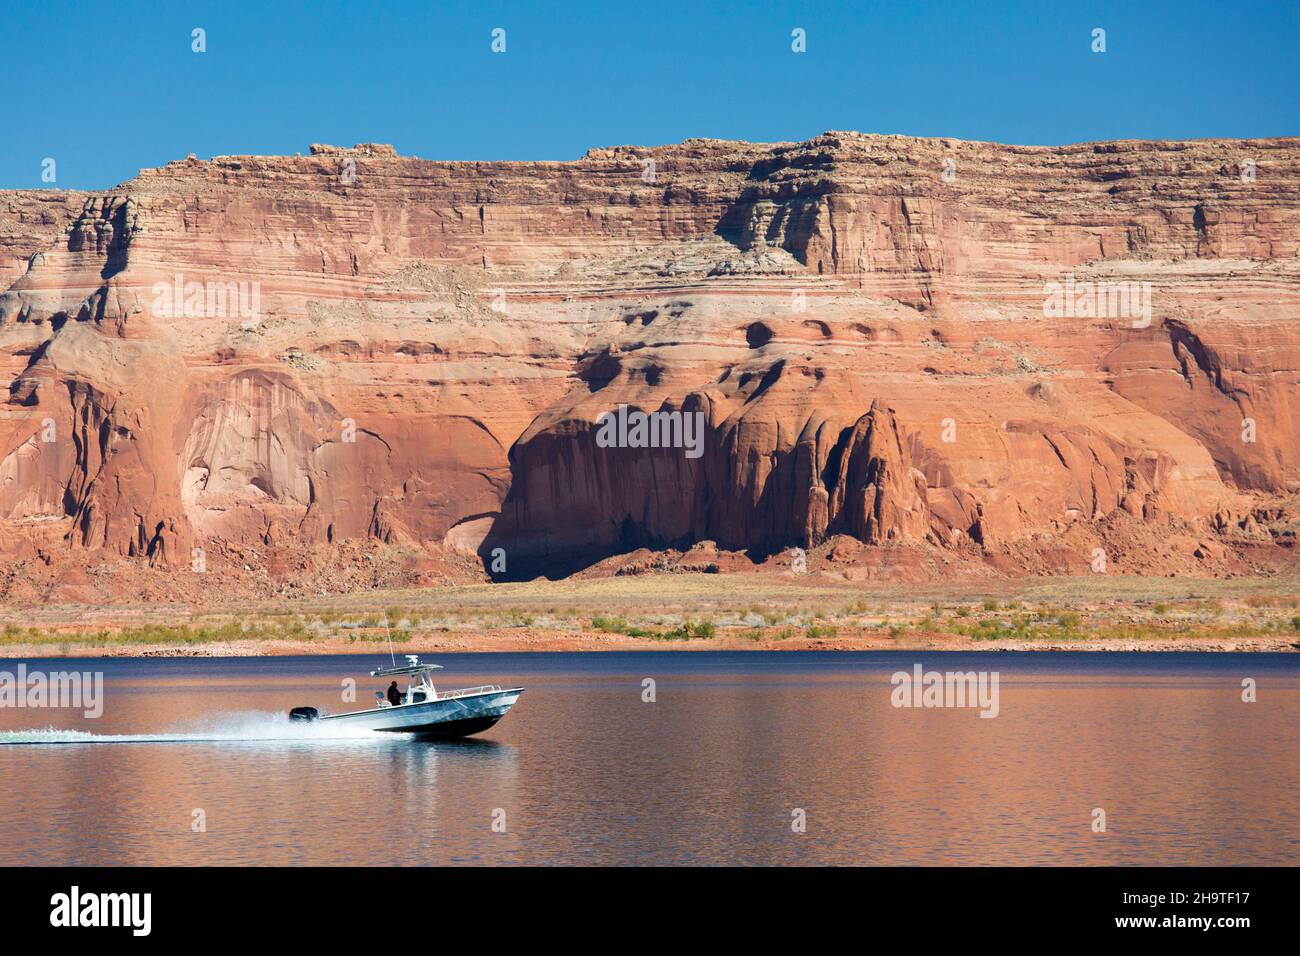 Área Nacional de Recreación de Glen Canyon, Utah, Estados Unidos. Pequeño barco que cruza el lago Powell bajo altos acantilados de arenisca roja. Foto de stock